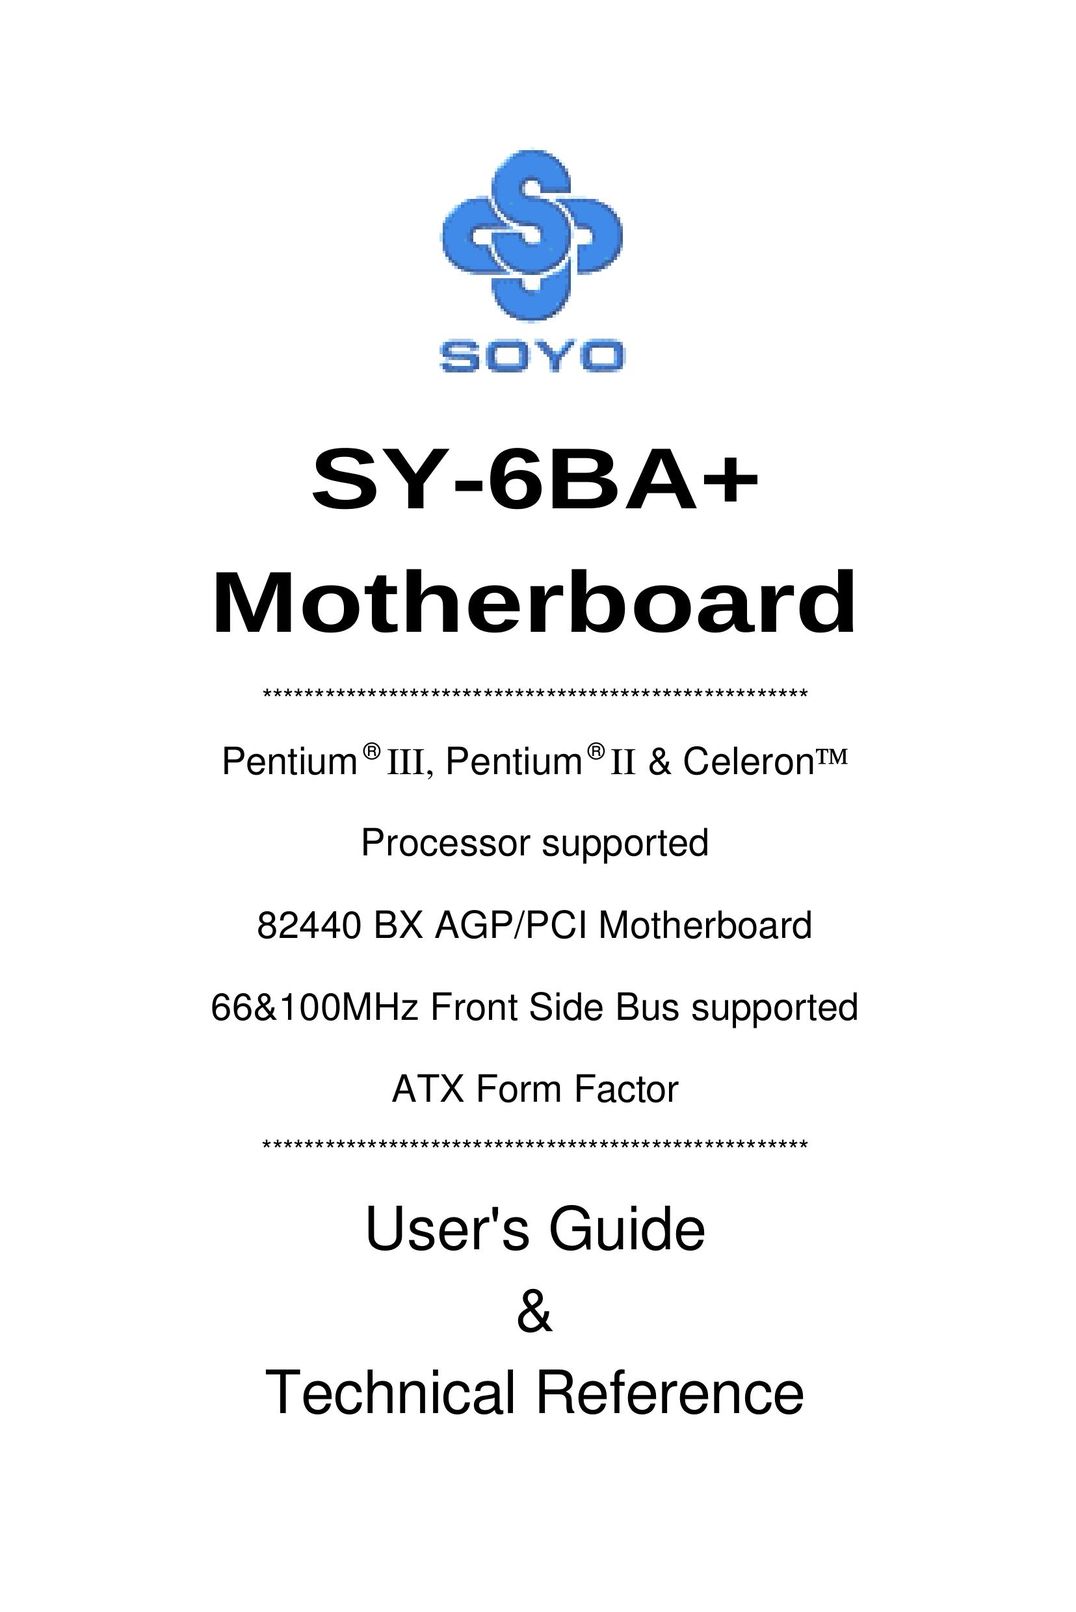 SOYO Motherboard Computer Hardware User Manual